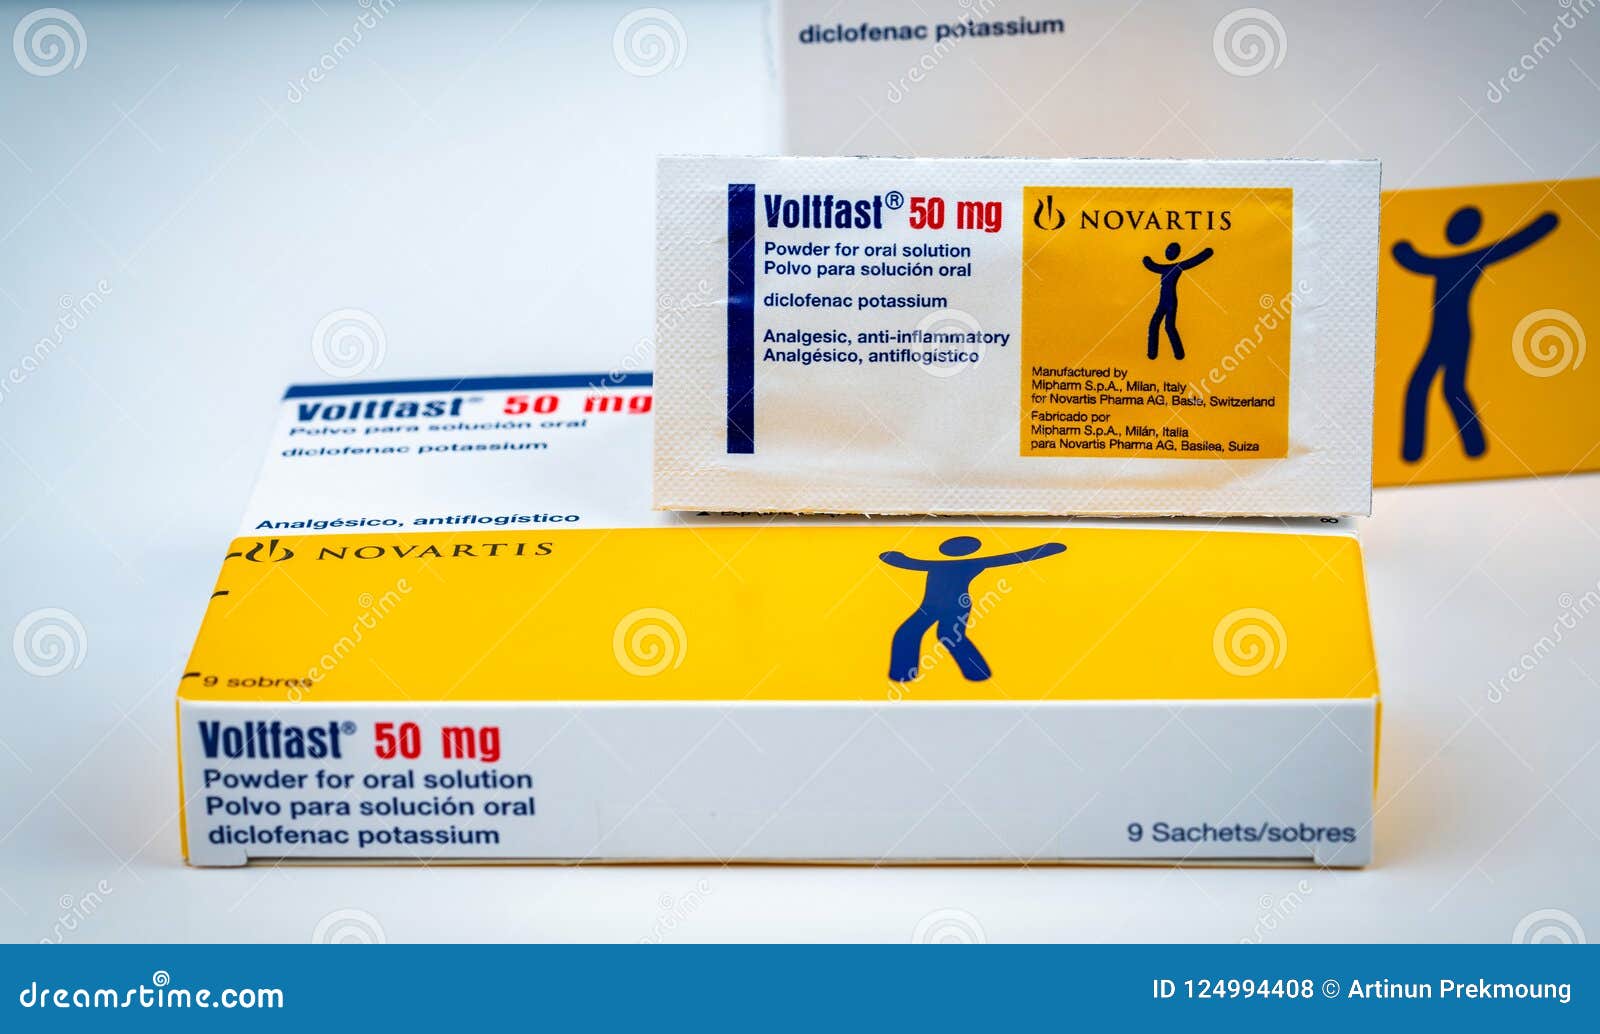 Voltfast 50 Mg Diclofenac Potassium Product Of Novartis Manufactured By Mipharm Italy For Novatis Pharma Switzerland Editorial Stock Photo Image Of Drug Diclofenac 124994408